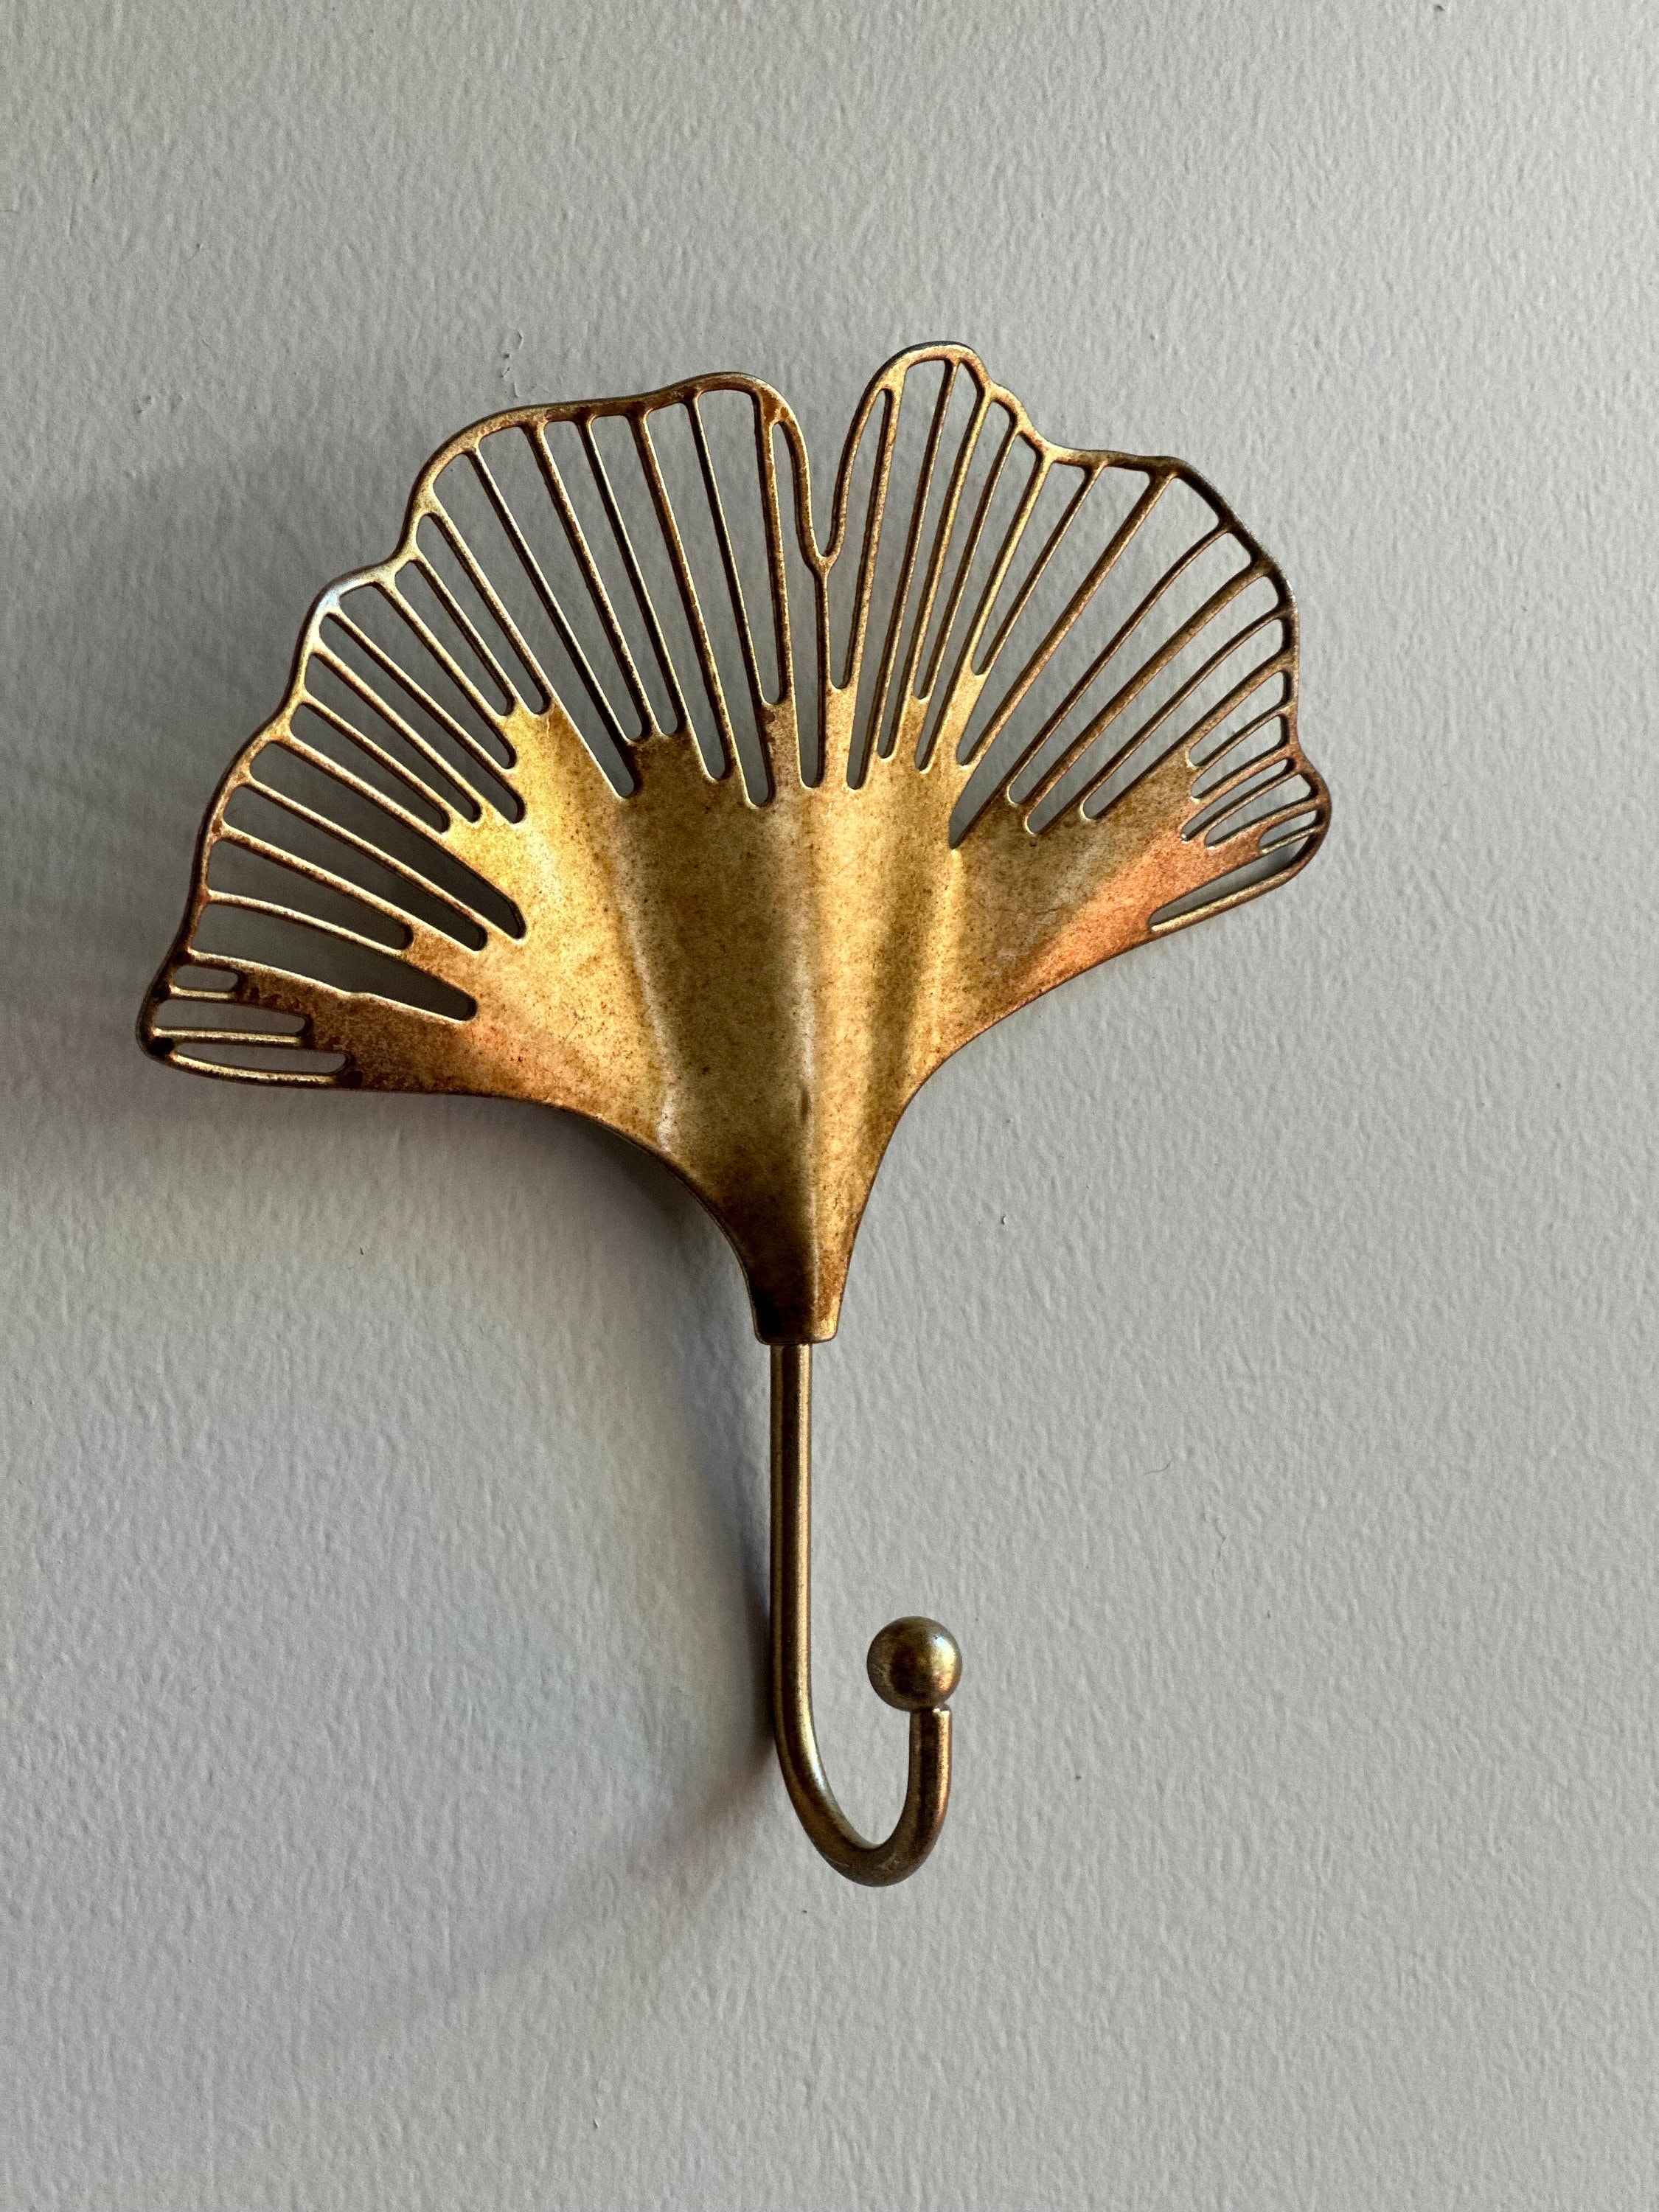 Metal Fish Hook Double Wall Hook Antique Brass Finish Towel Hanger